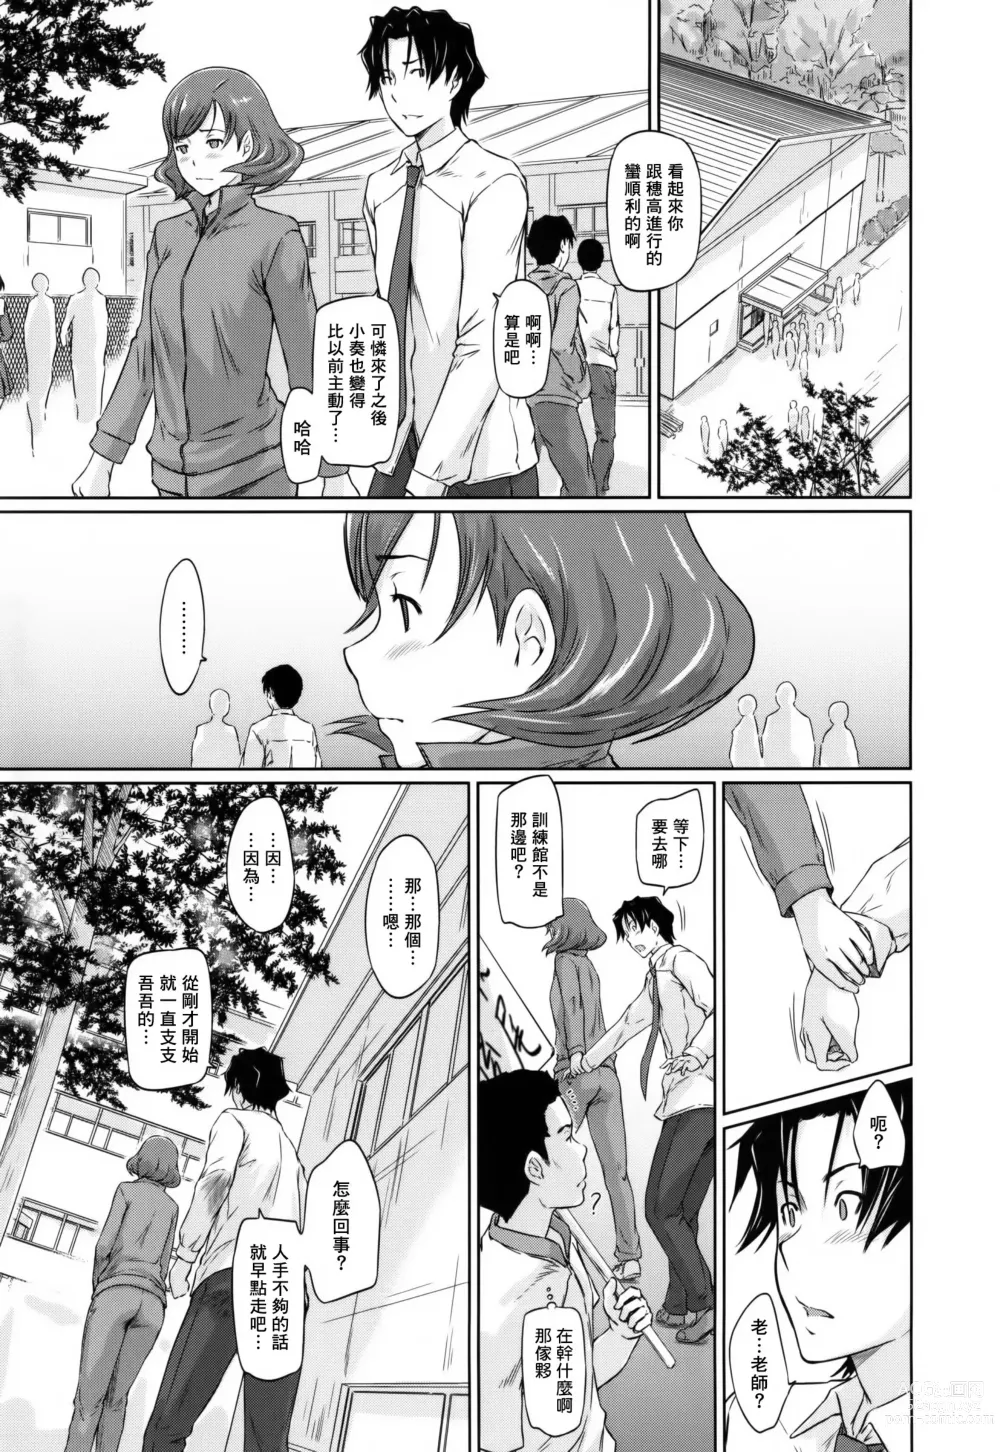 Page 199 of manga Suki ni Nattara Icchokusen!